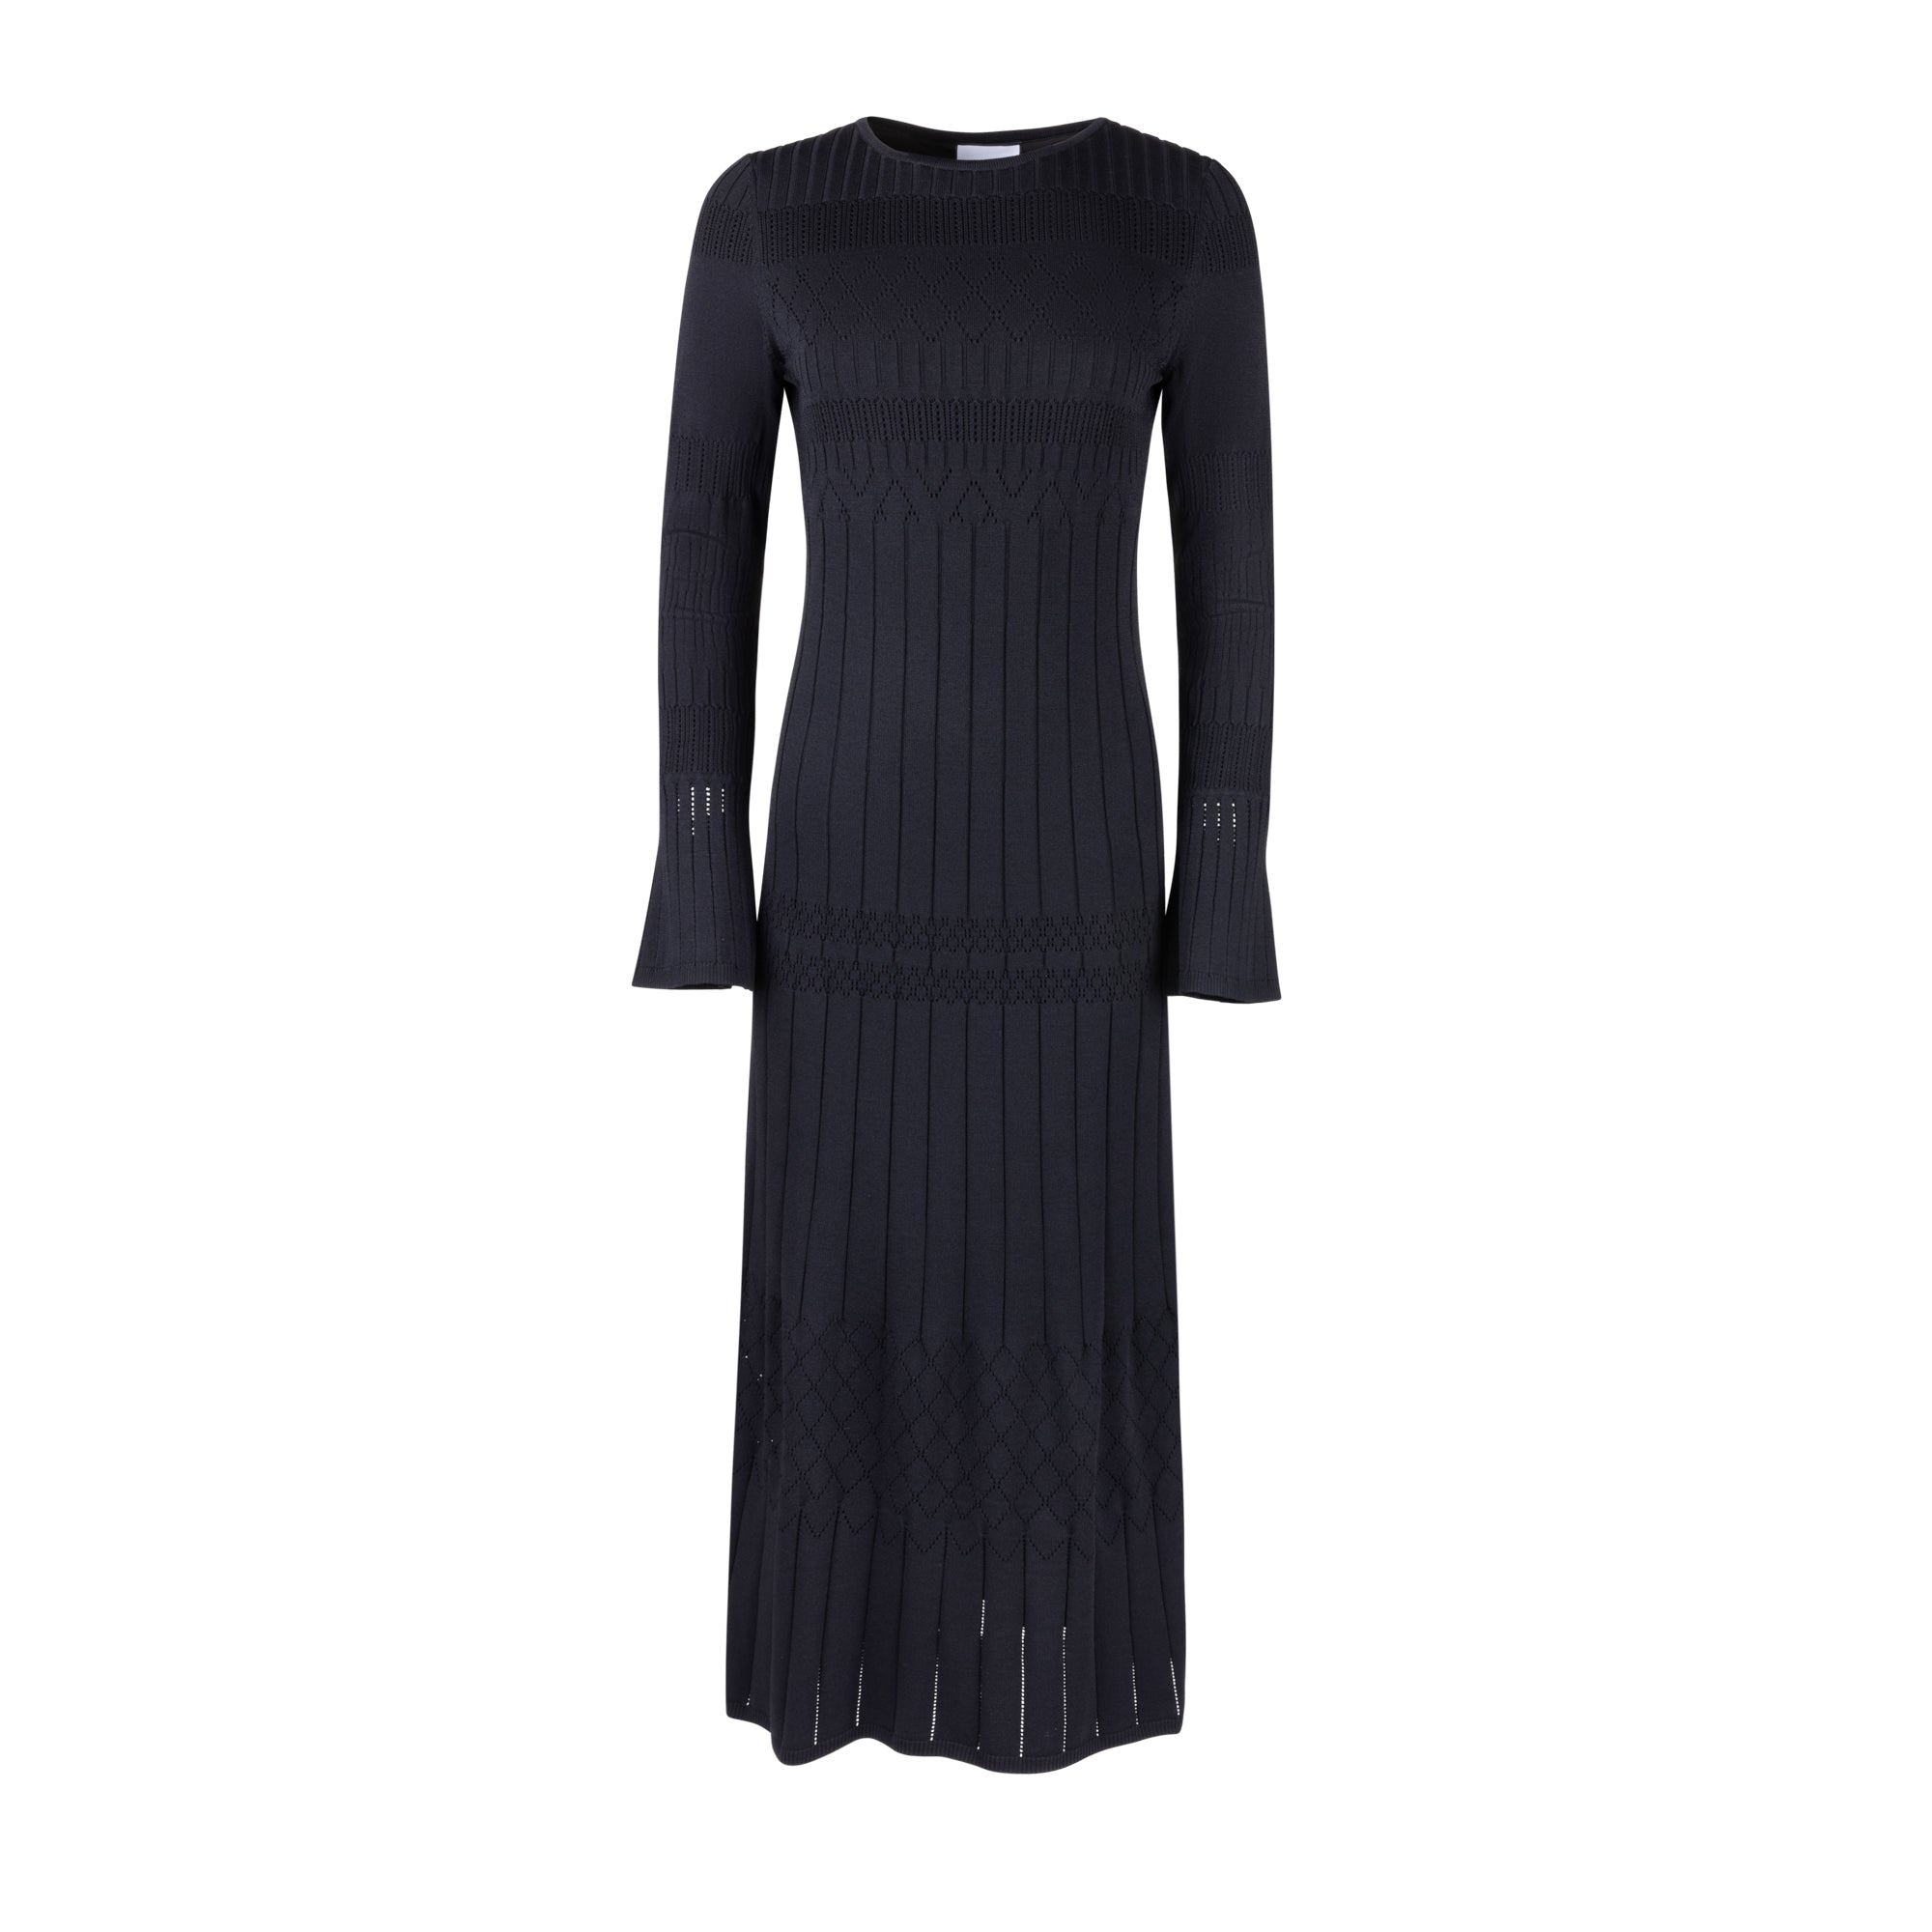 Chromatic Knit Dress - Black